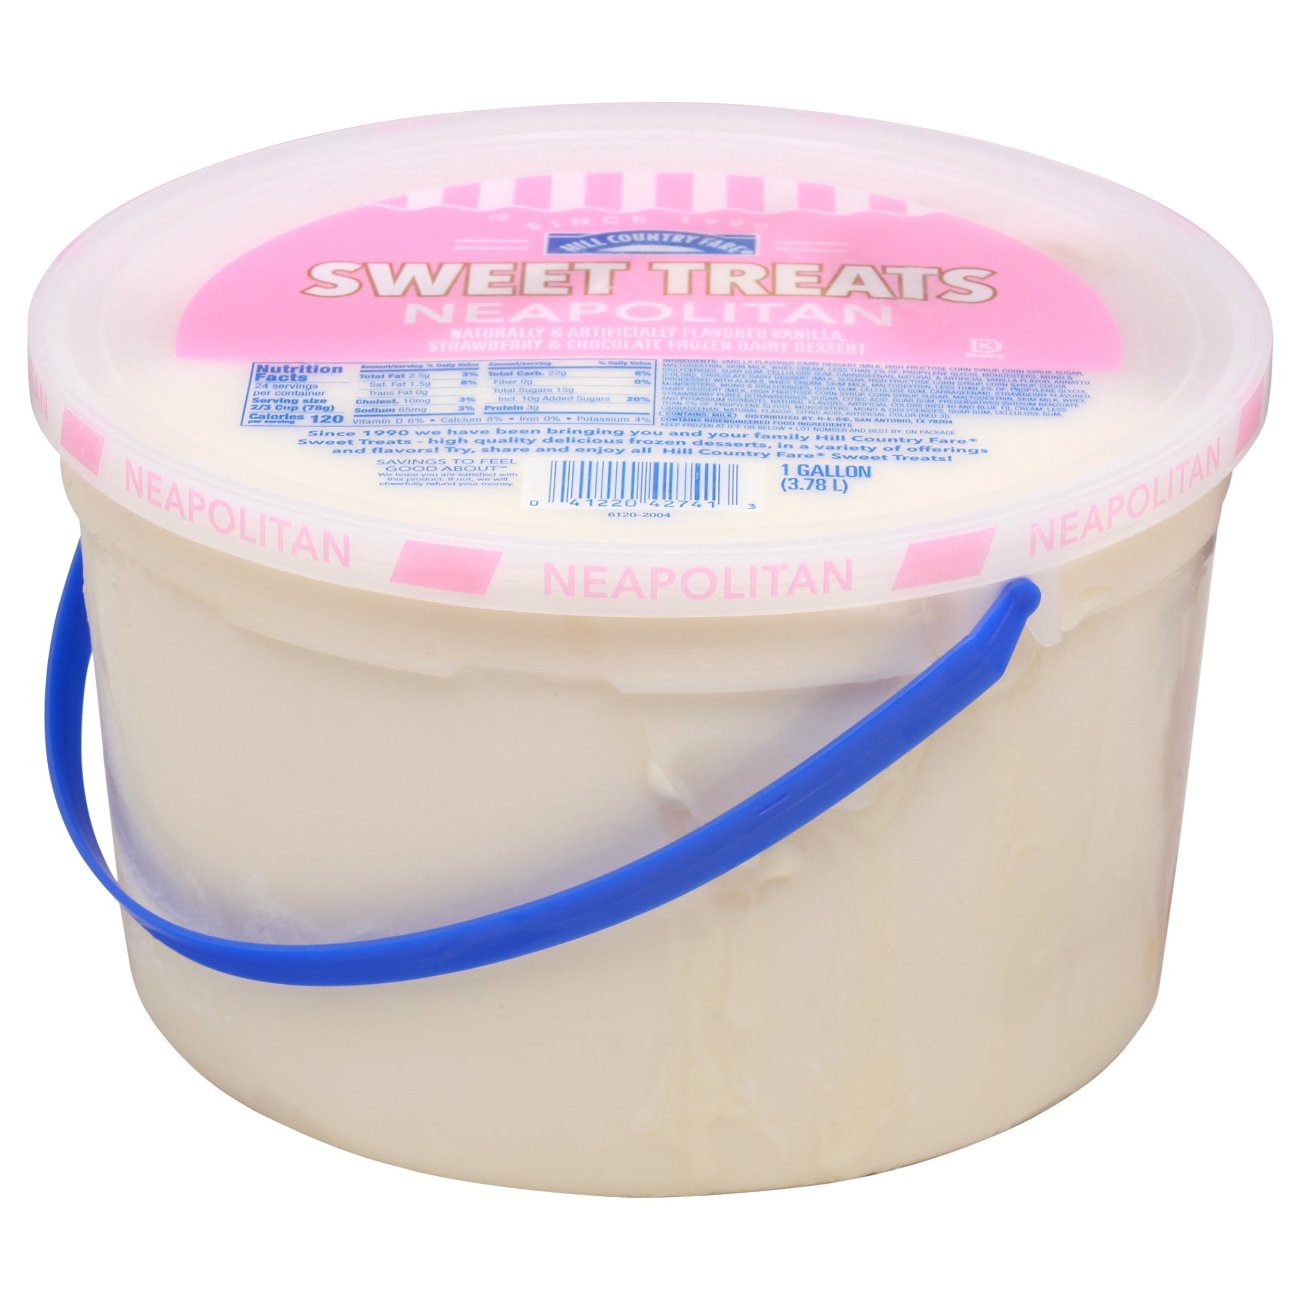 1 Gallon Ice Cream Tub with Lid (8)